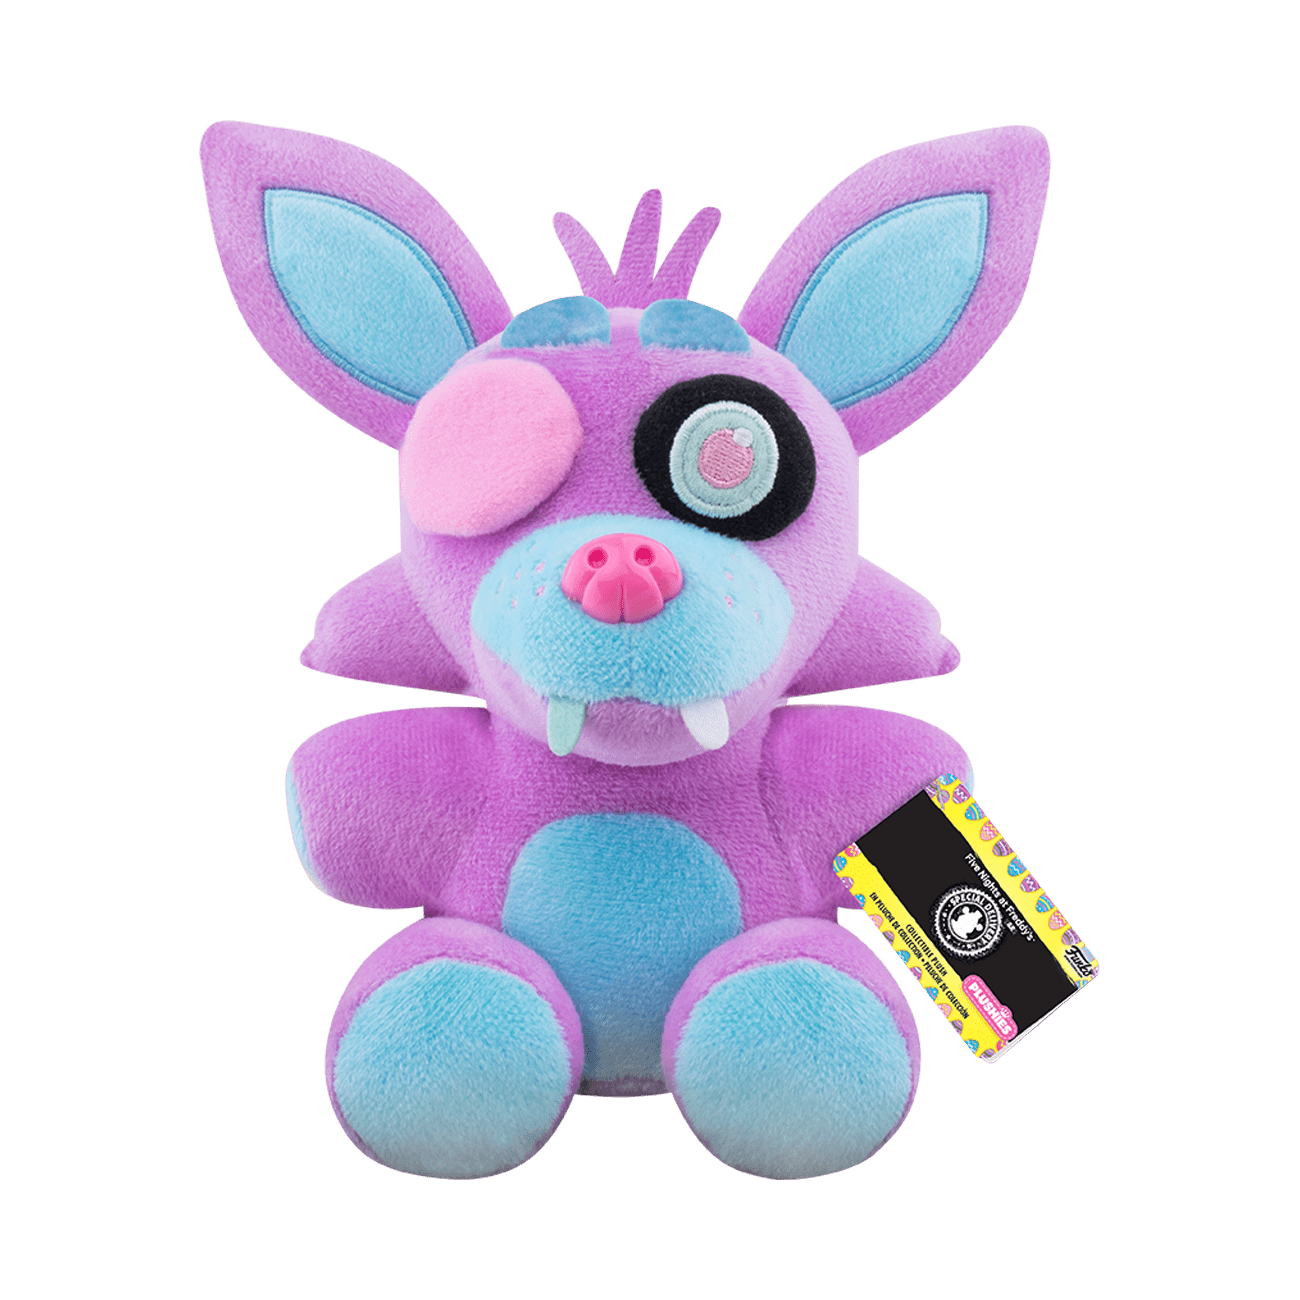 New Funko FNAF Five Nights At Freddy's Nightmare Bonnie Purple 6" Plush Toy Doll 